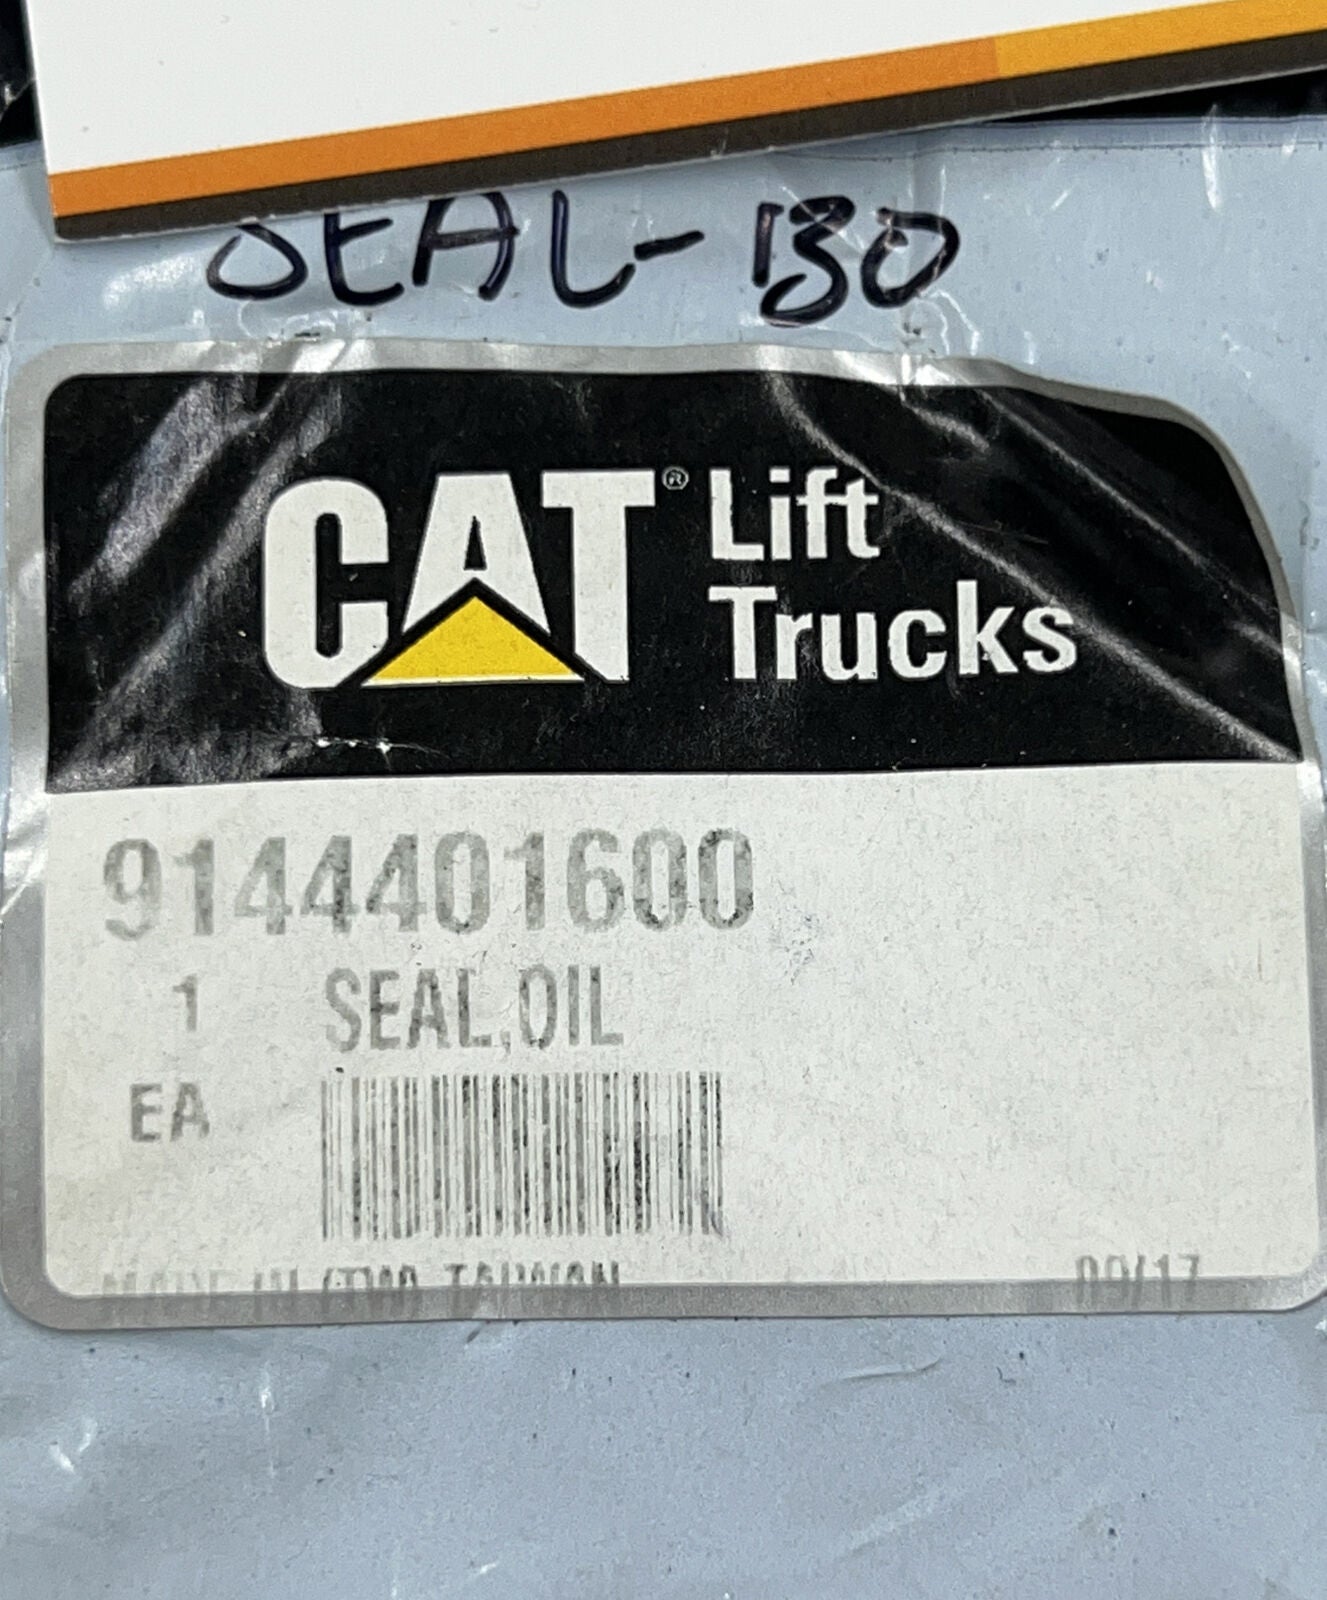 CAT Caterpillar Oil Seal 9144401600 (YE128) - 0